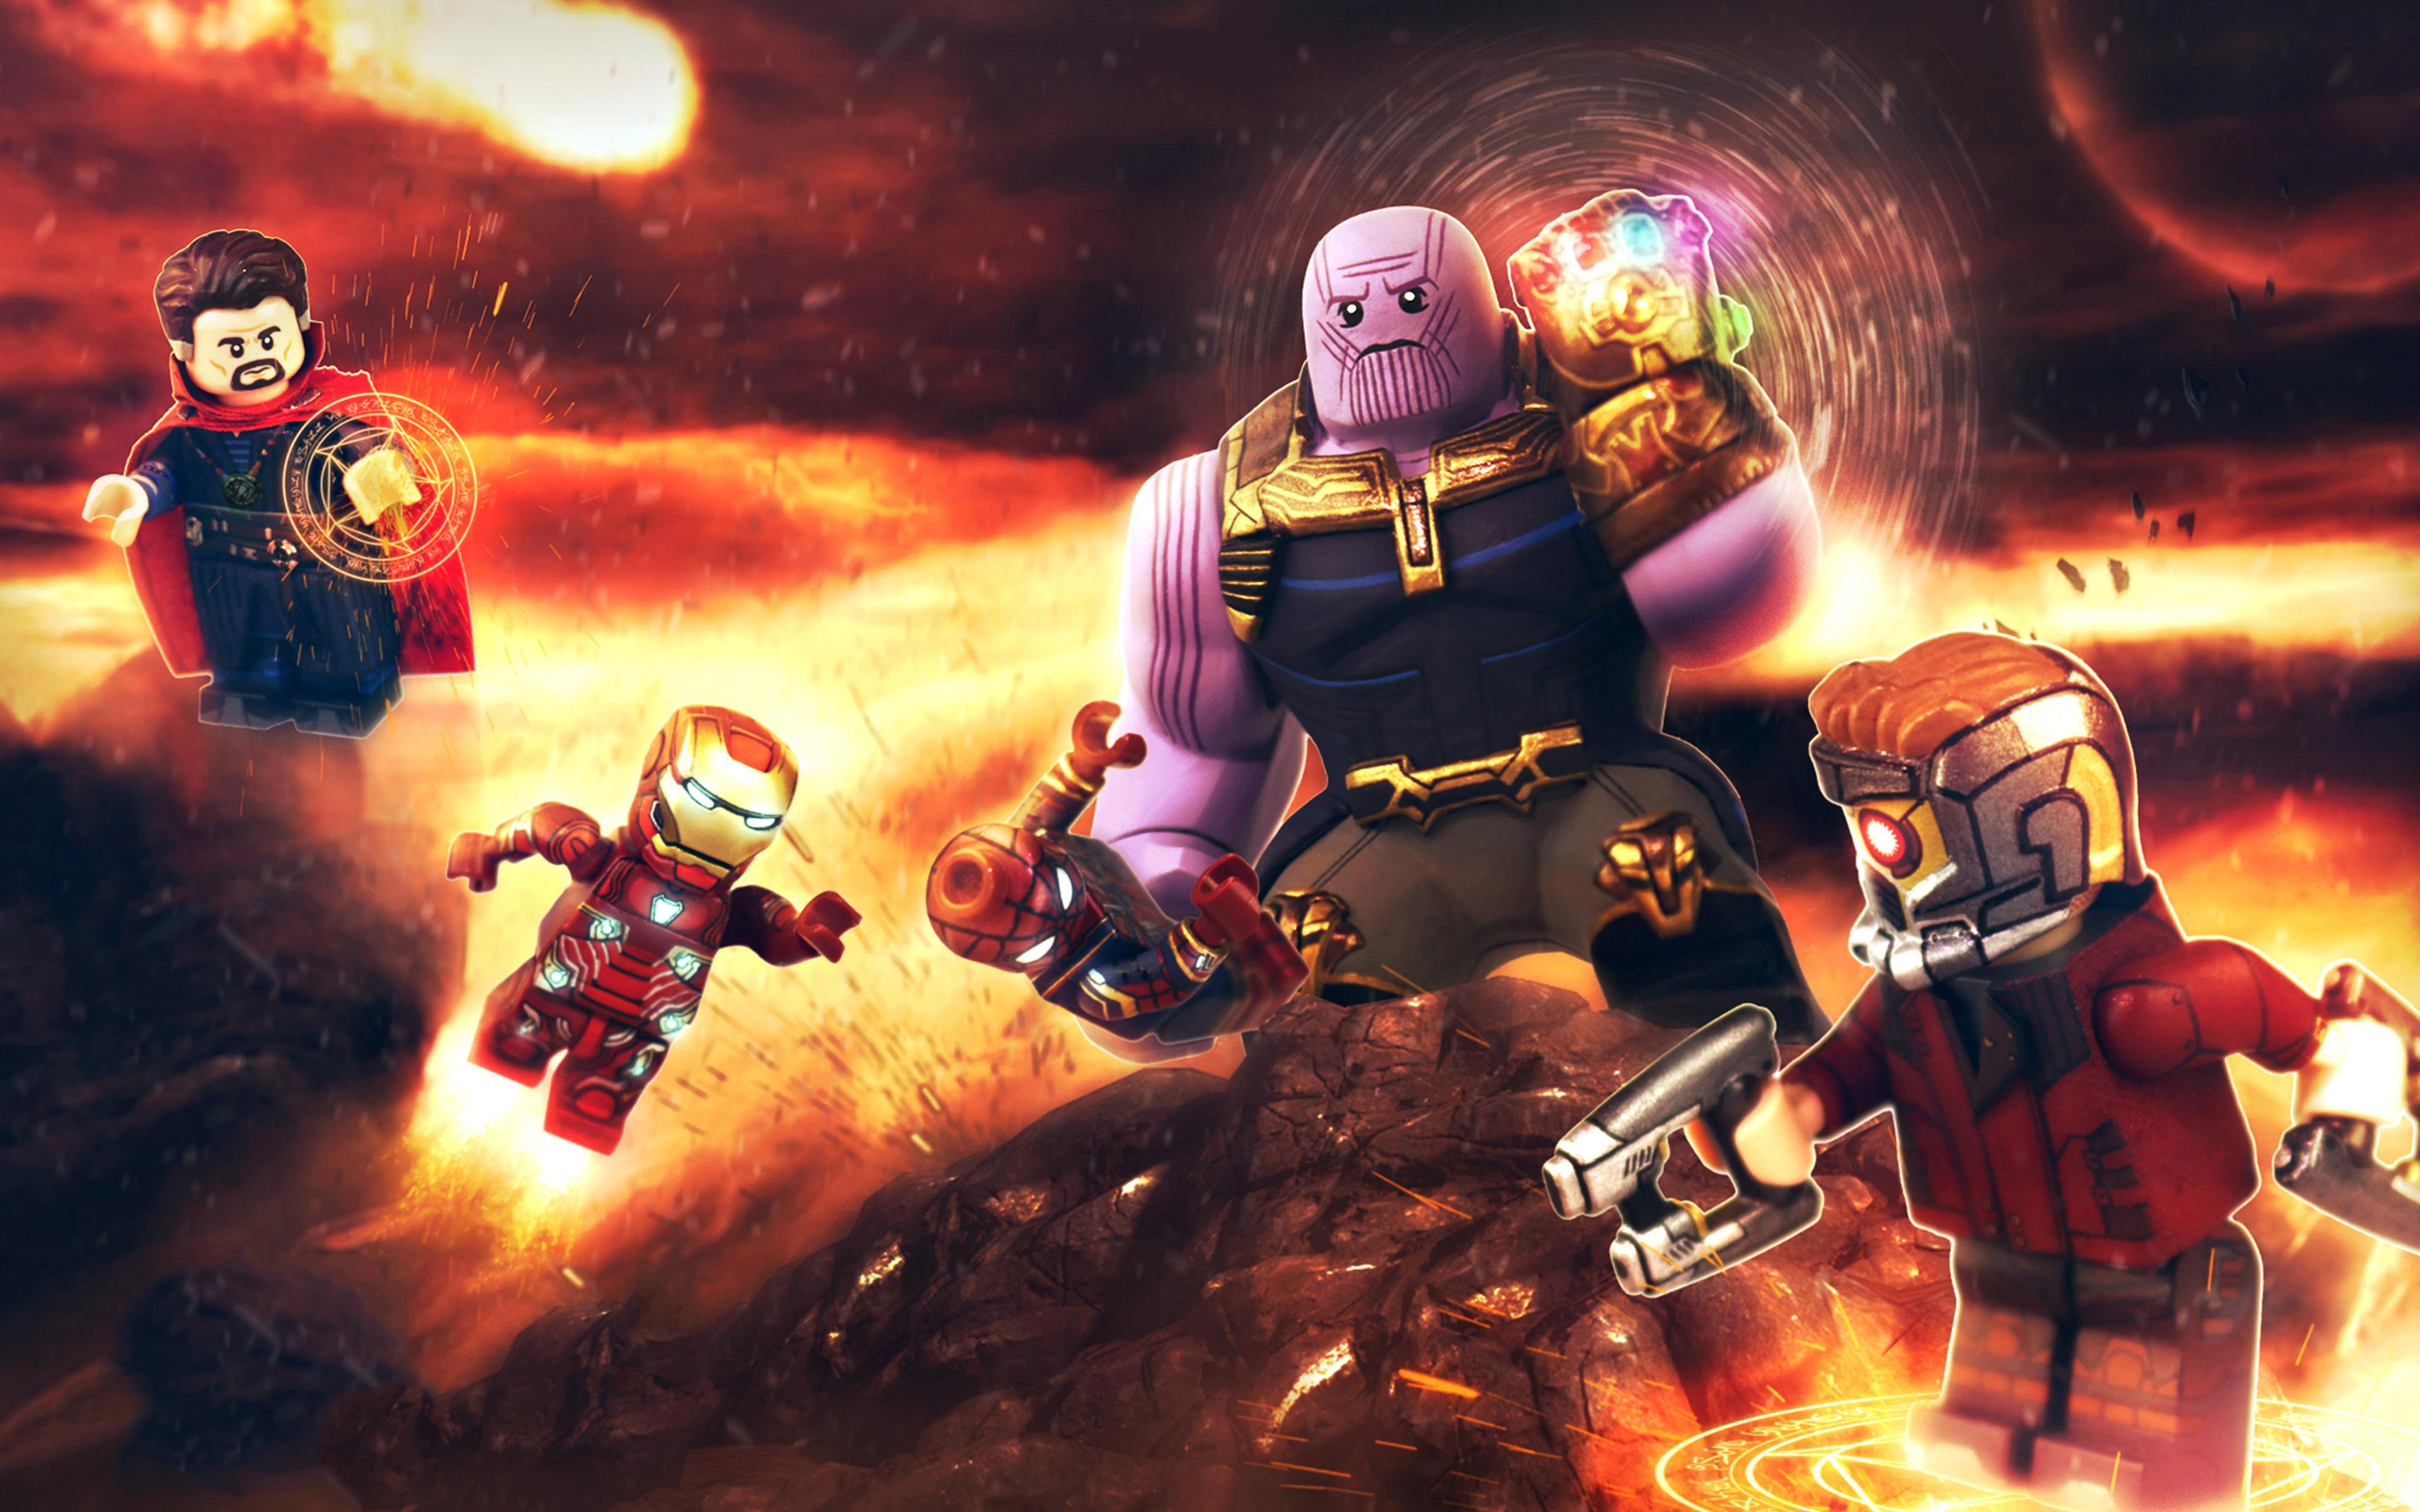 Download wallpaper 4k, Thanos, Iron Man, Captain America, lego